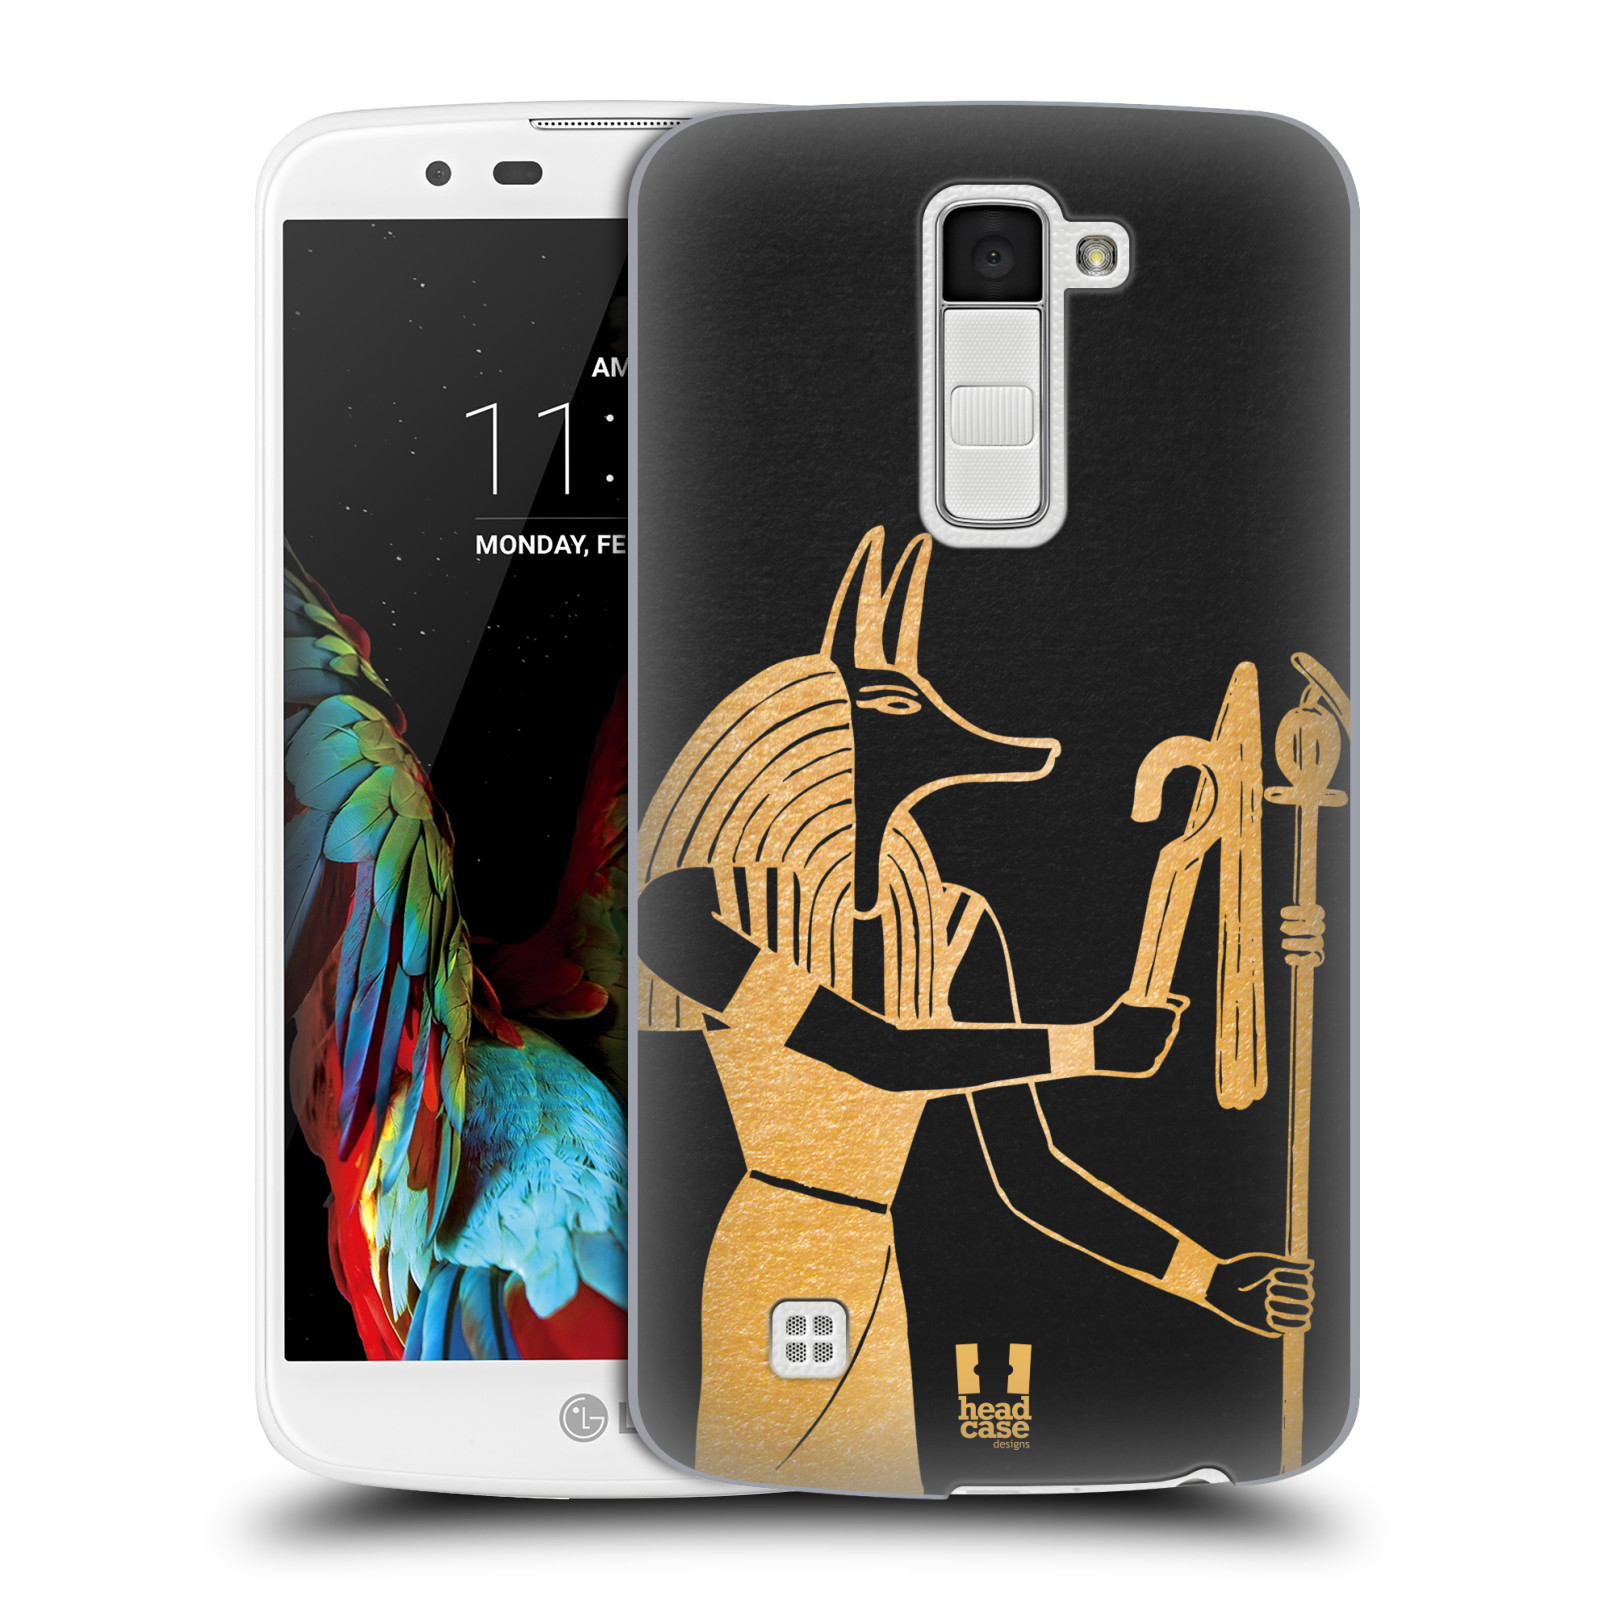 HEAD CASE plastový obal na mobil LG K10 vzor EGYPT zlatá a černá Anubis